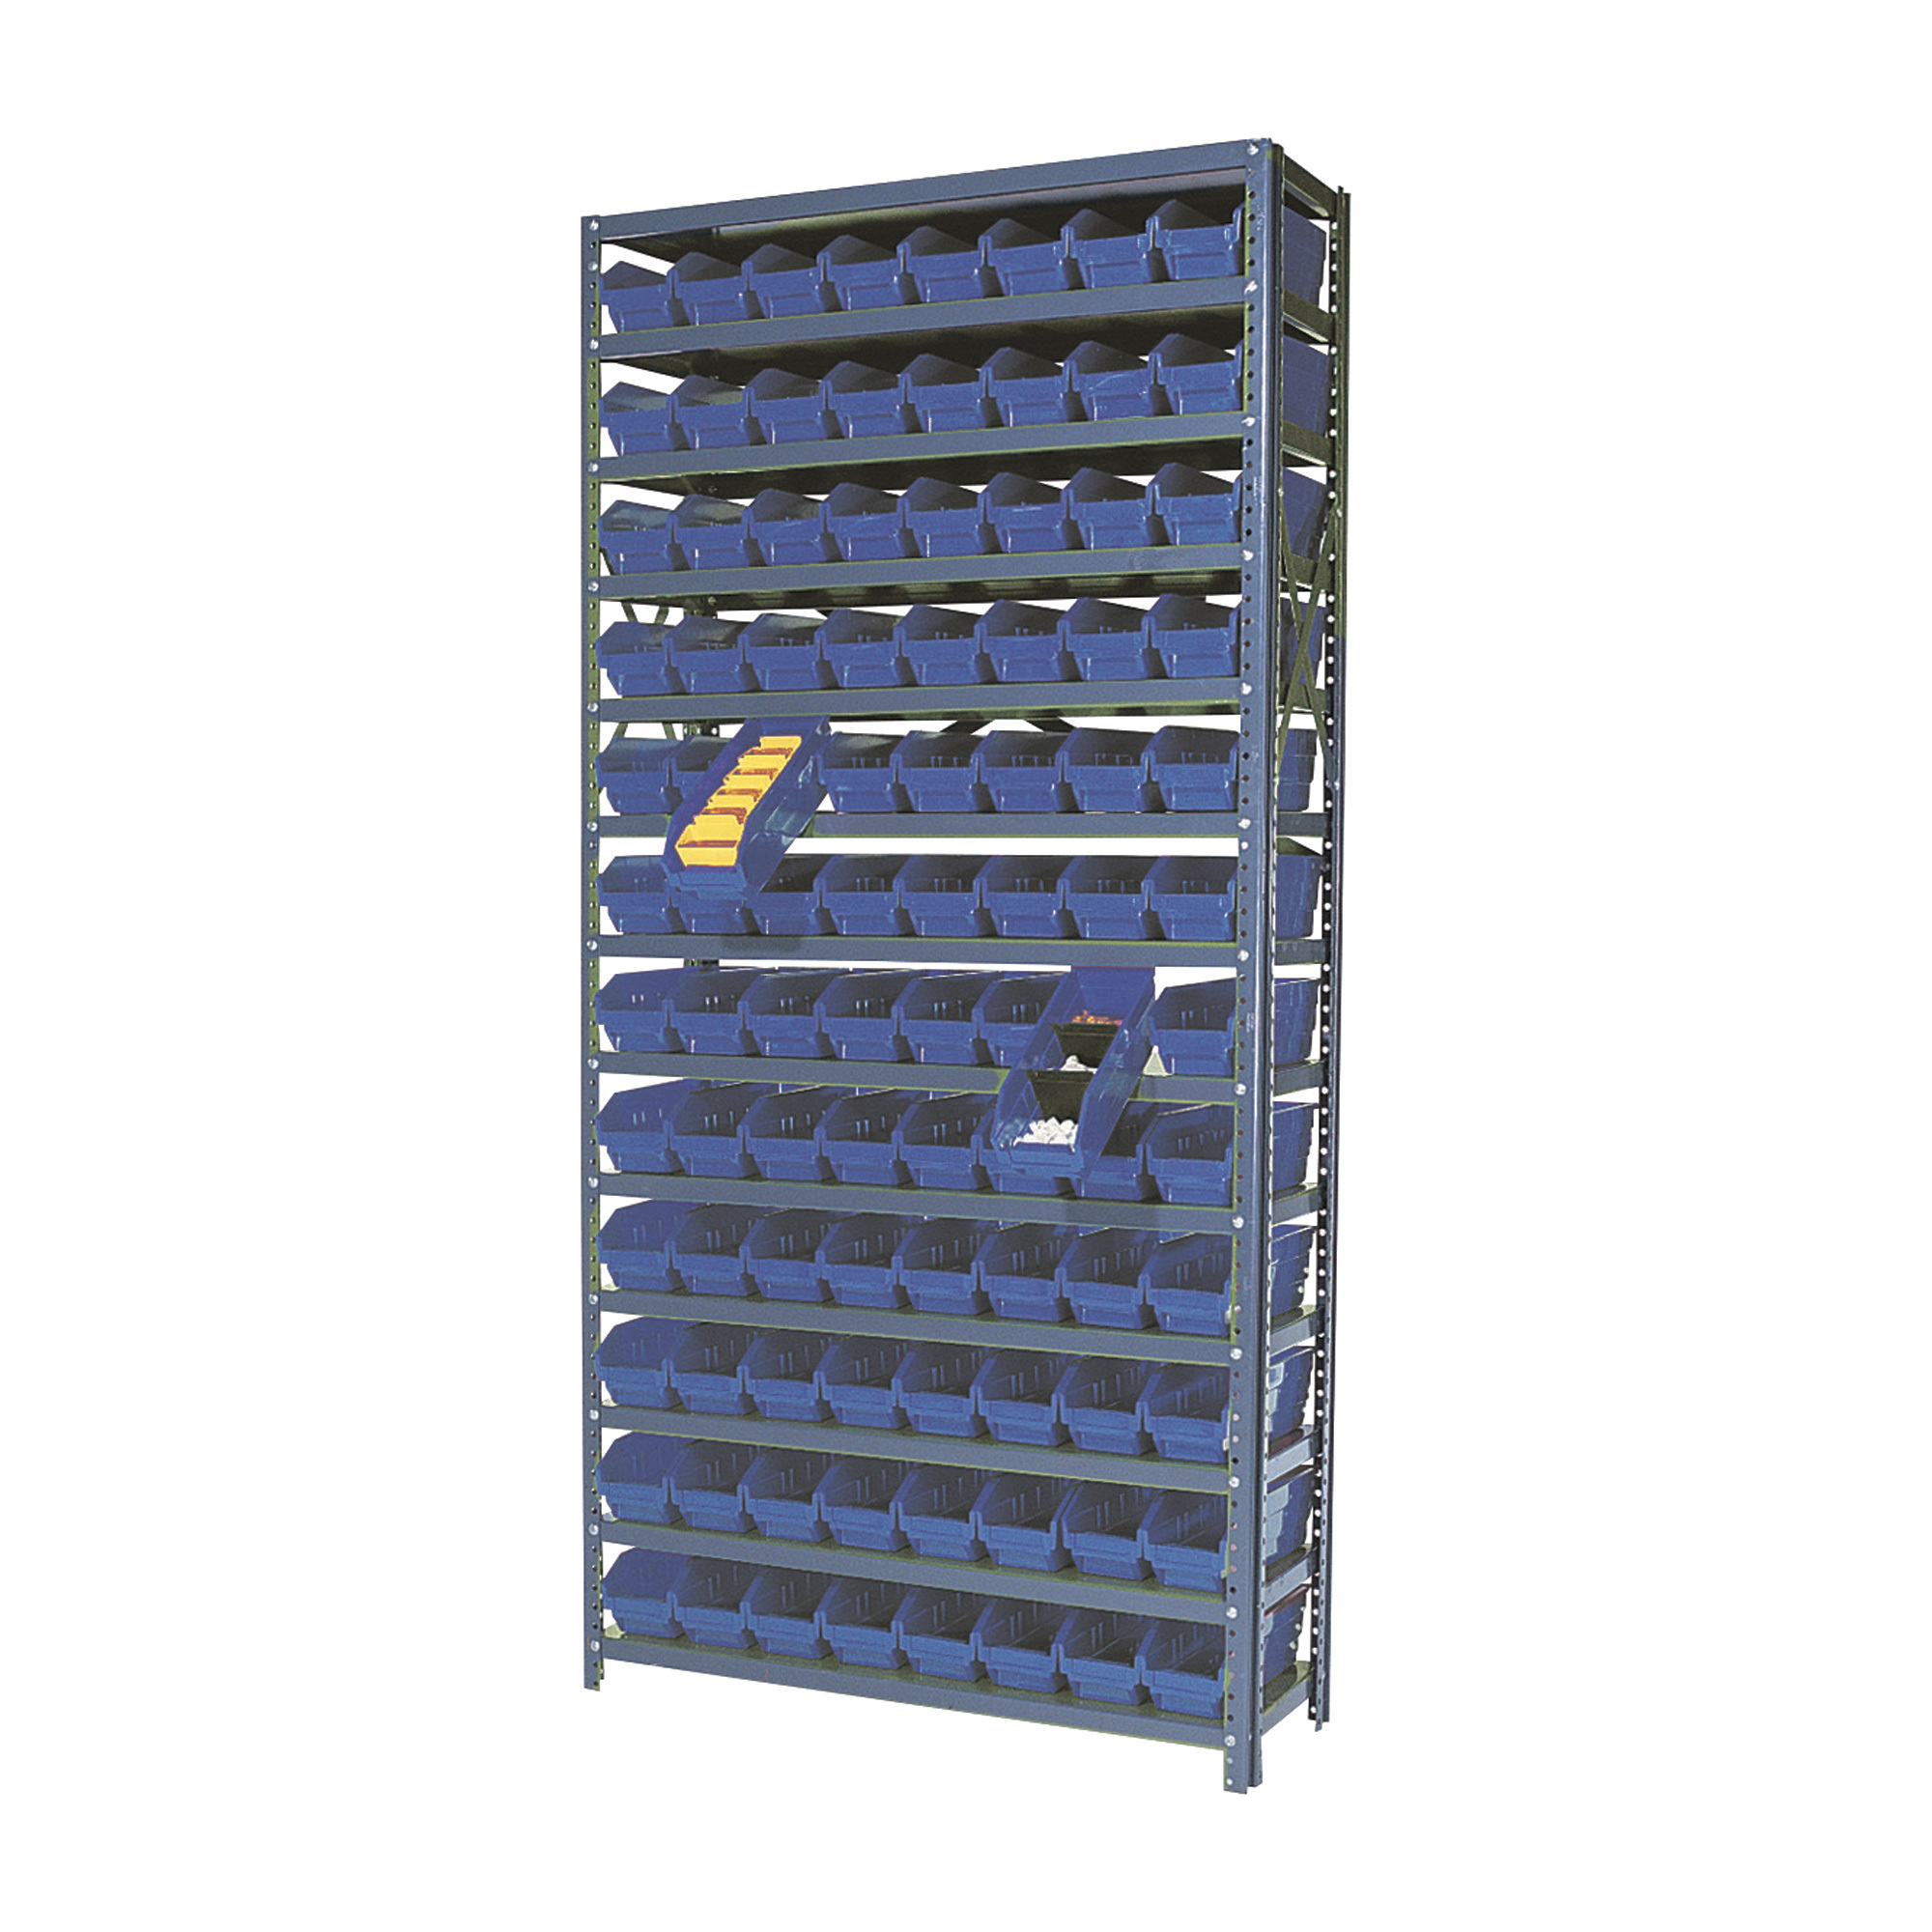 Quantum Storage Single Side Metal Shelving Unit With 96 Bins, 12Inch x 36Inch x 75Inch Rack Size, Blue, Model # 1275-101BL